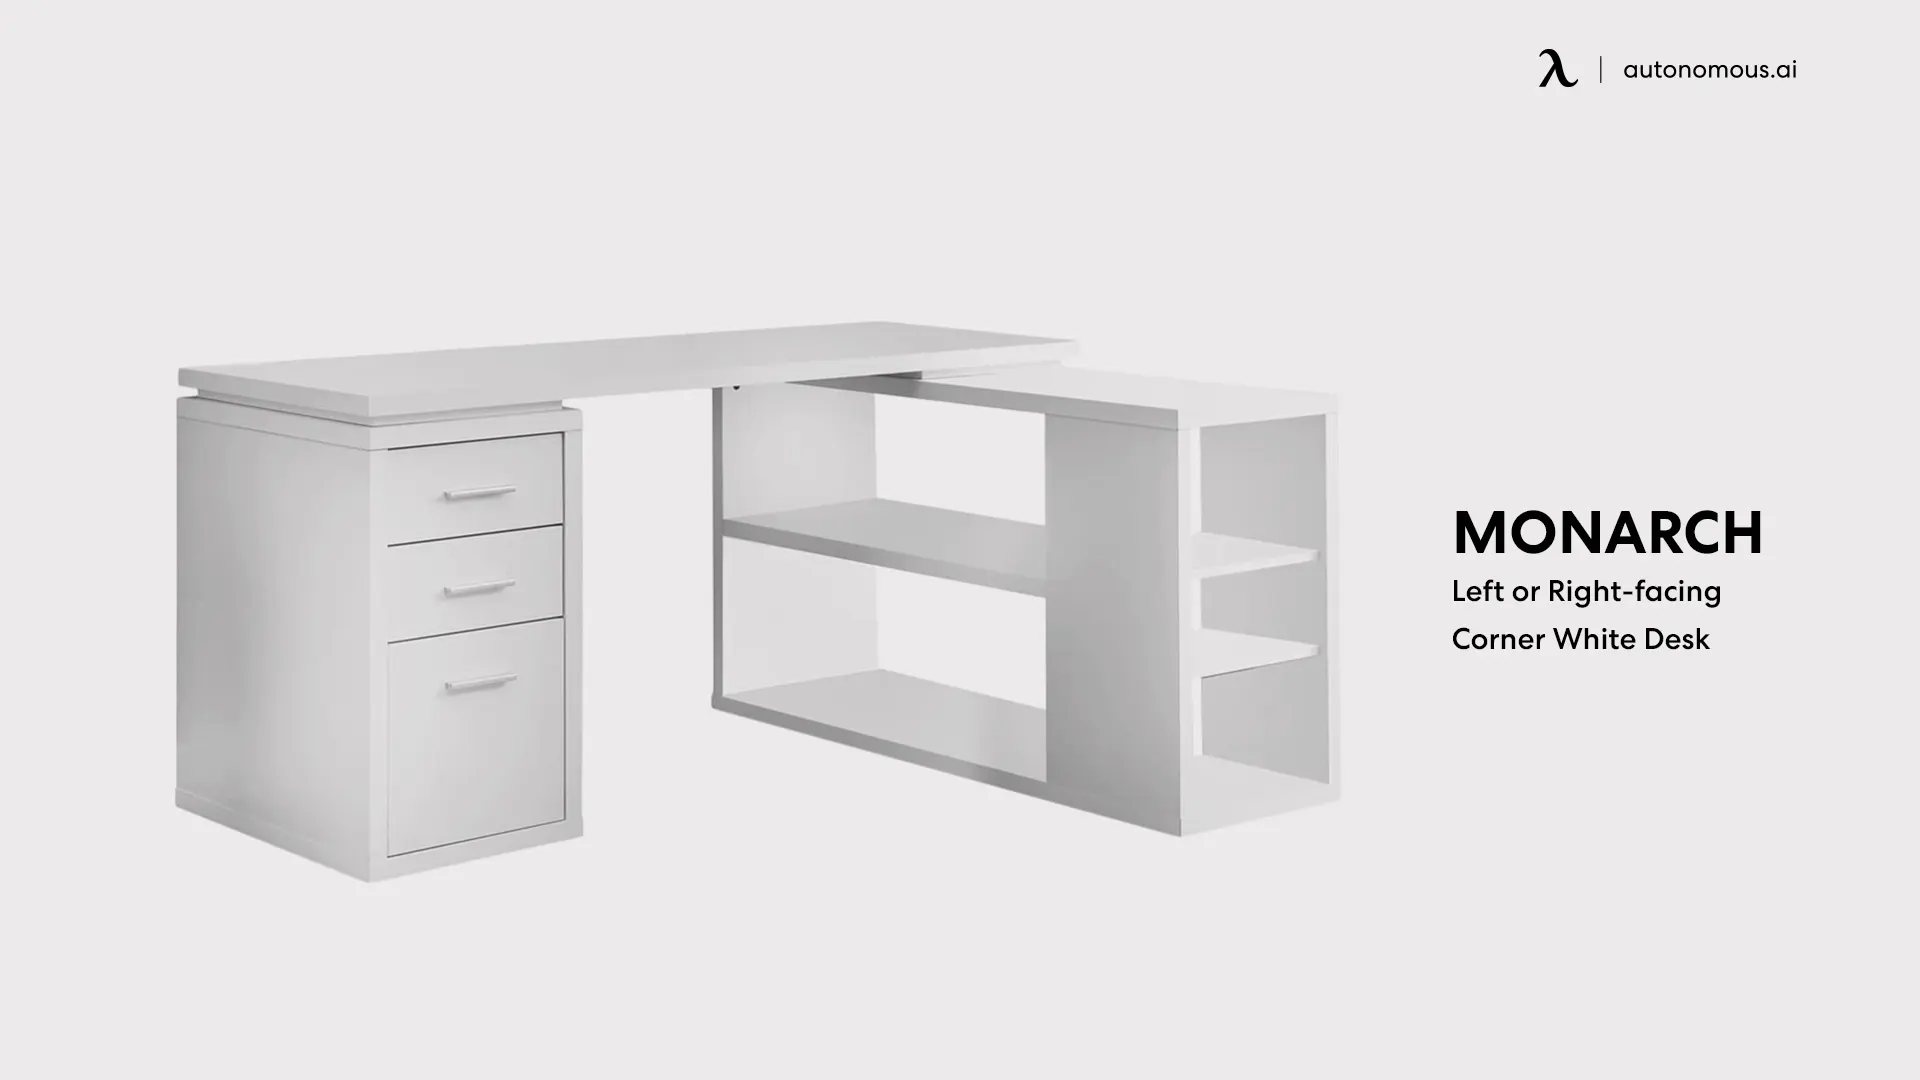 Left or Right-facing Corner White Desk by Monarch